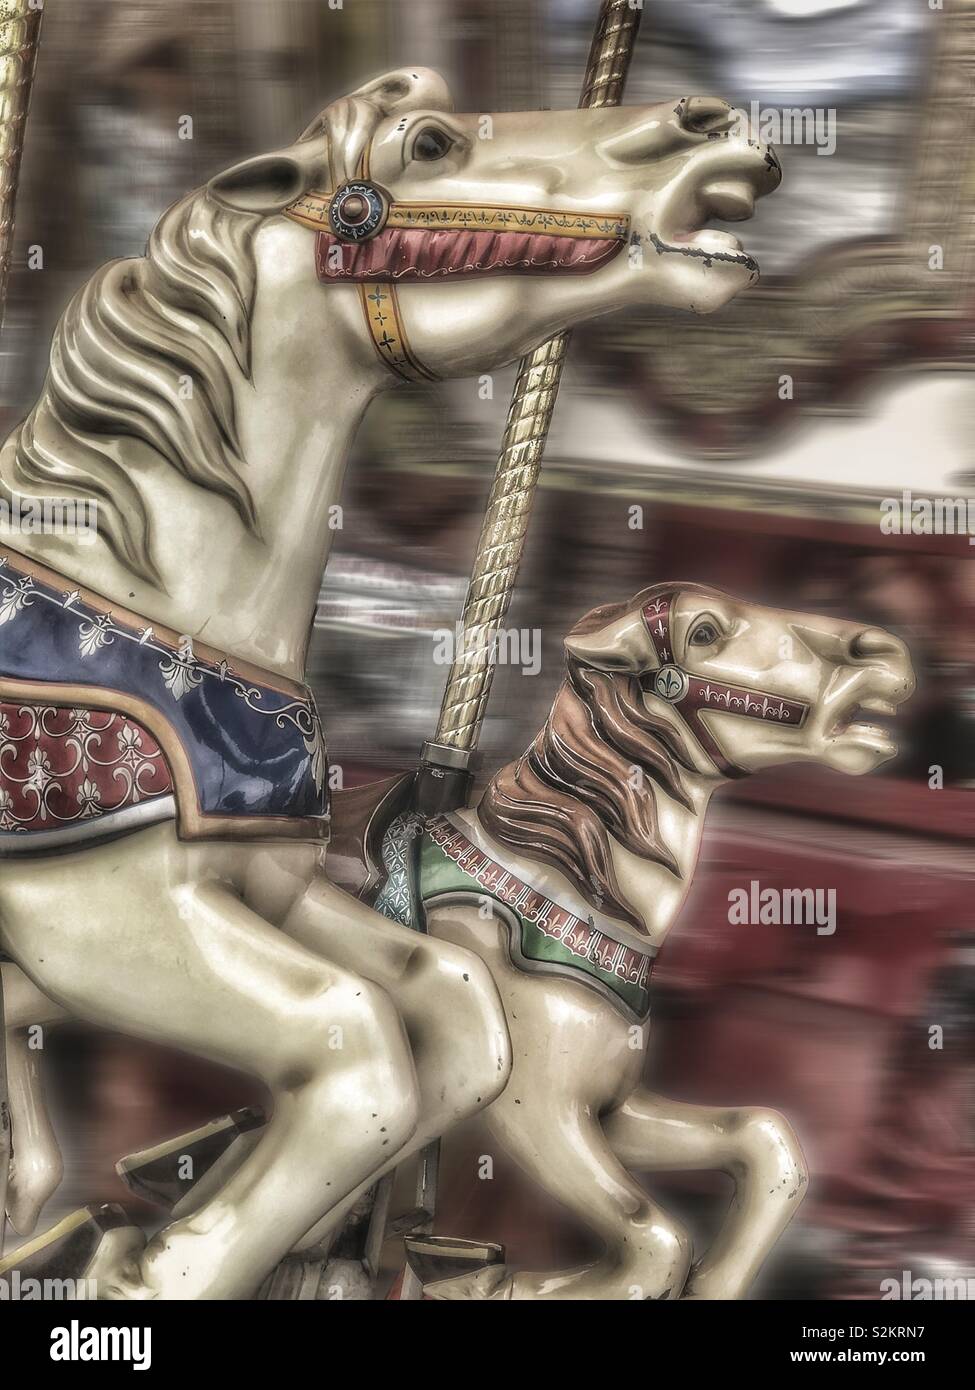 Street carnival carousel horses Stock Photo